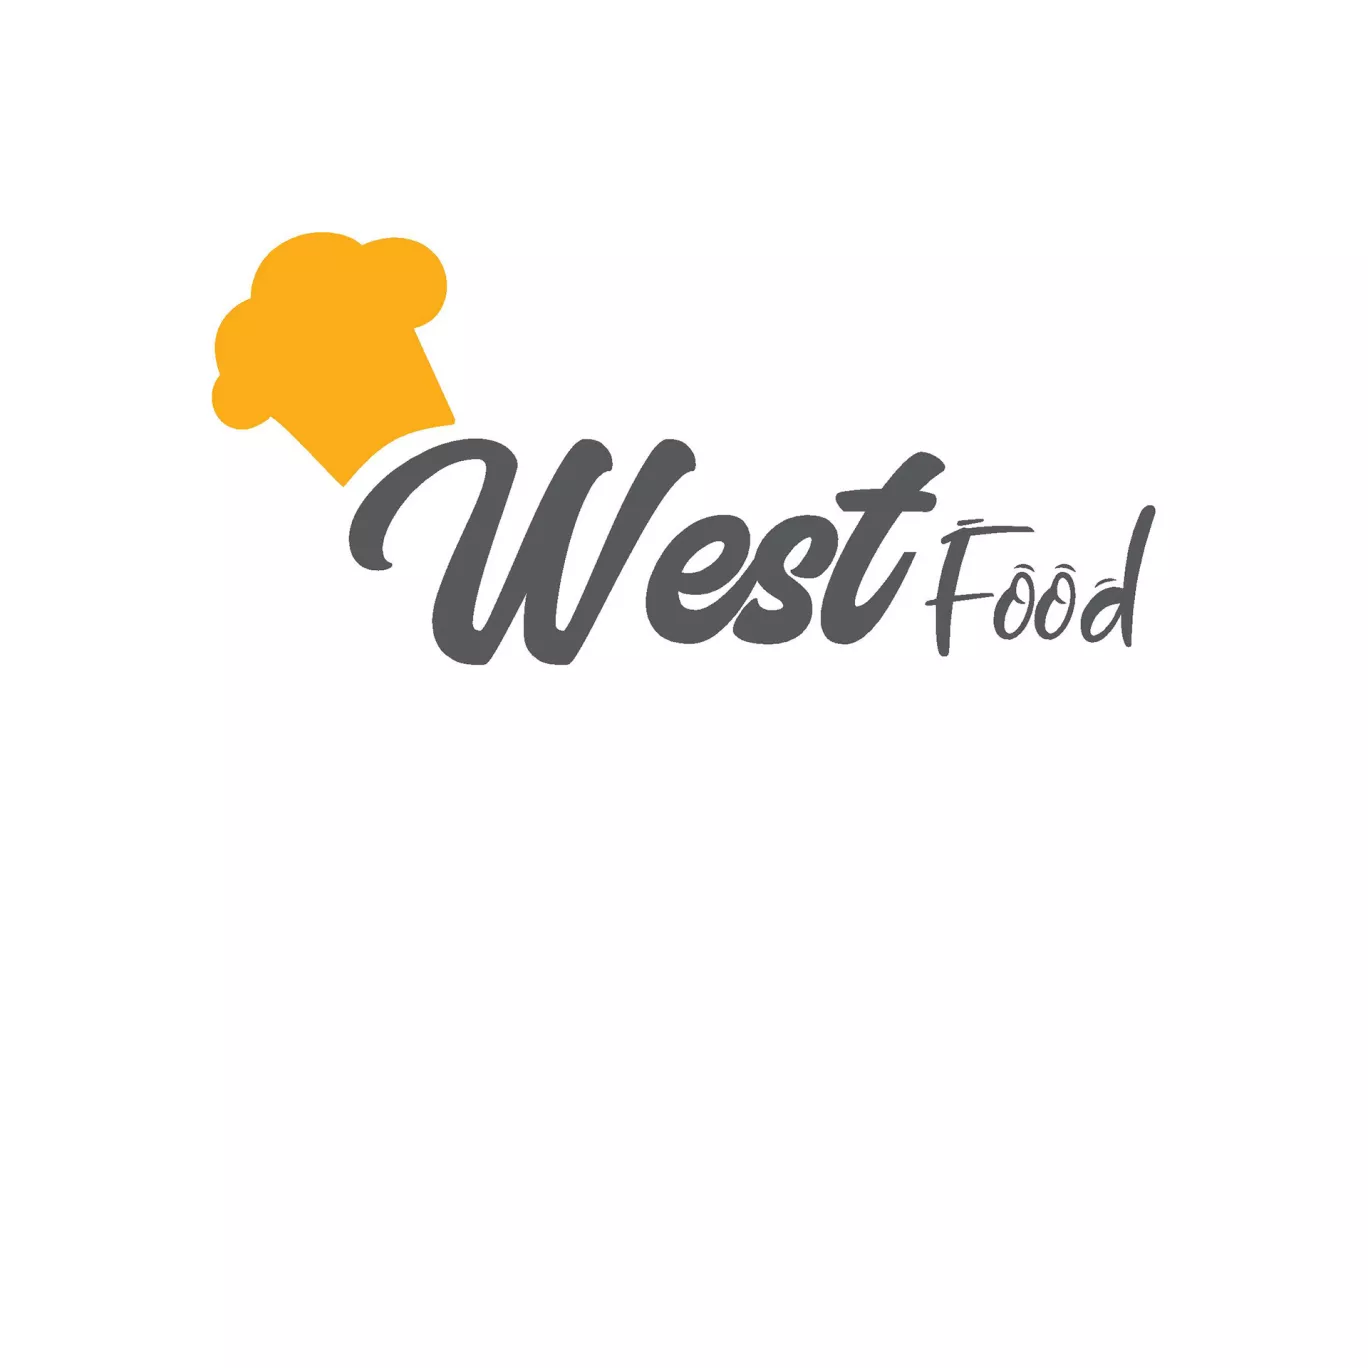 West Food